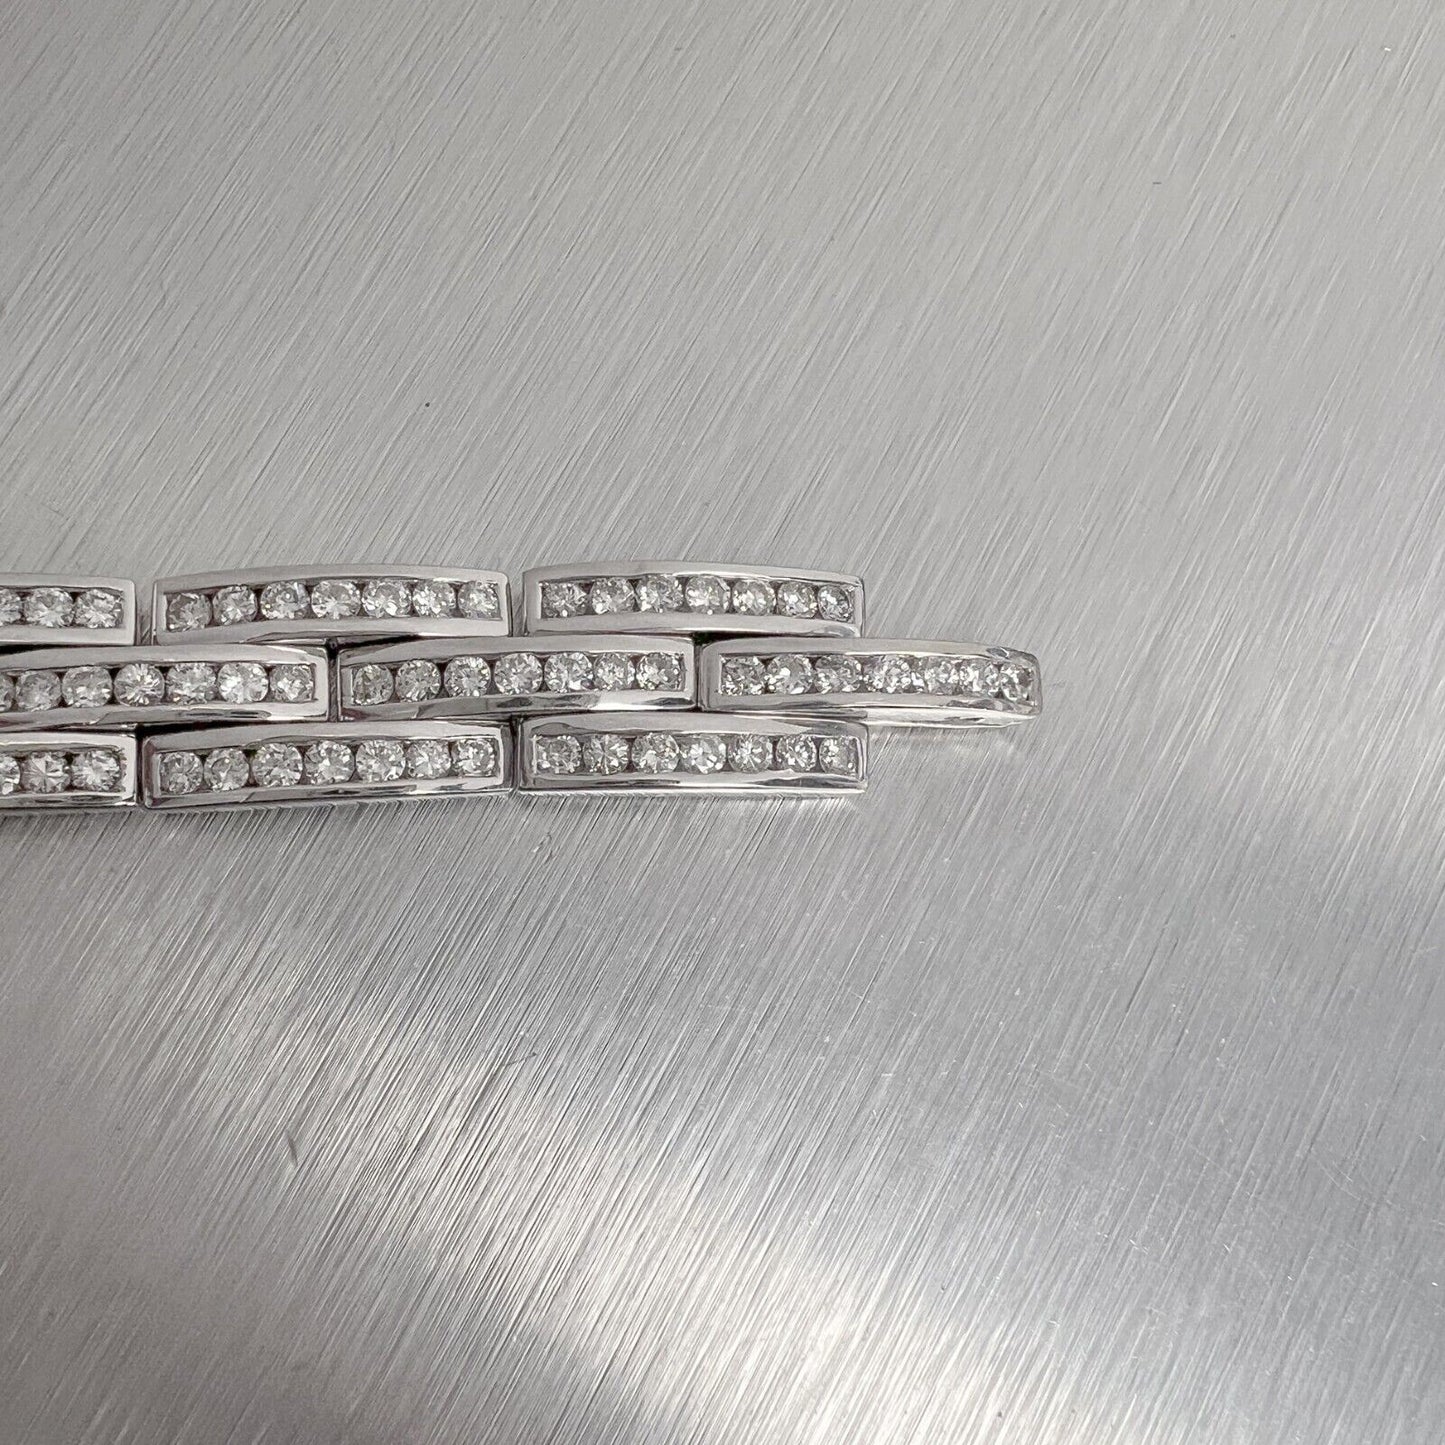 18k White Gold Diamond 3 Row Interlocking Link 12mm Chain Bracelet 7" 7.56ctw